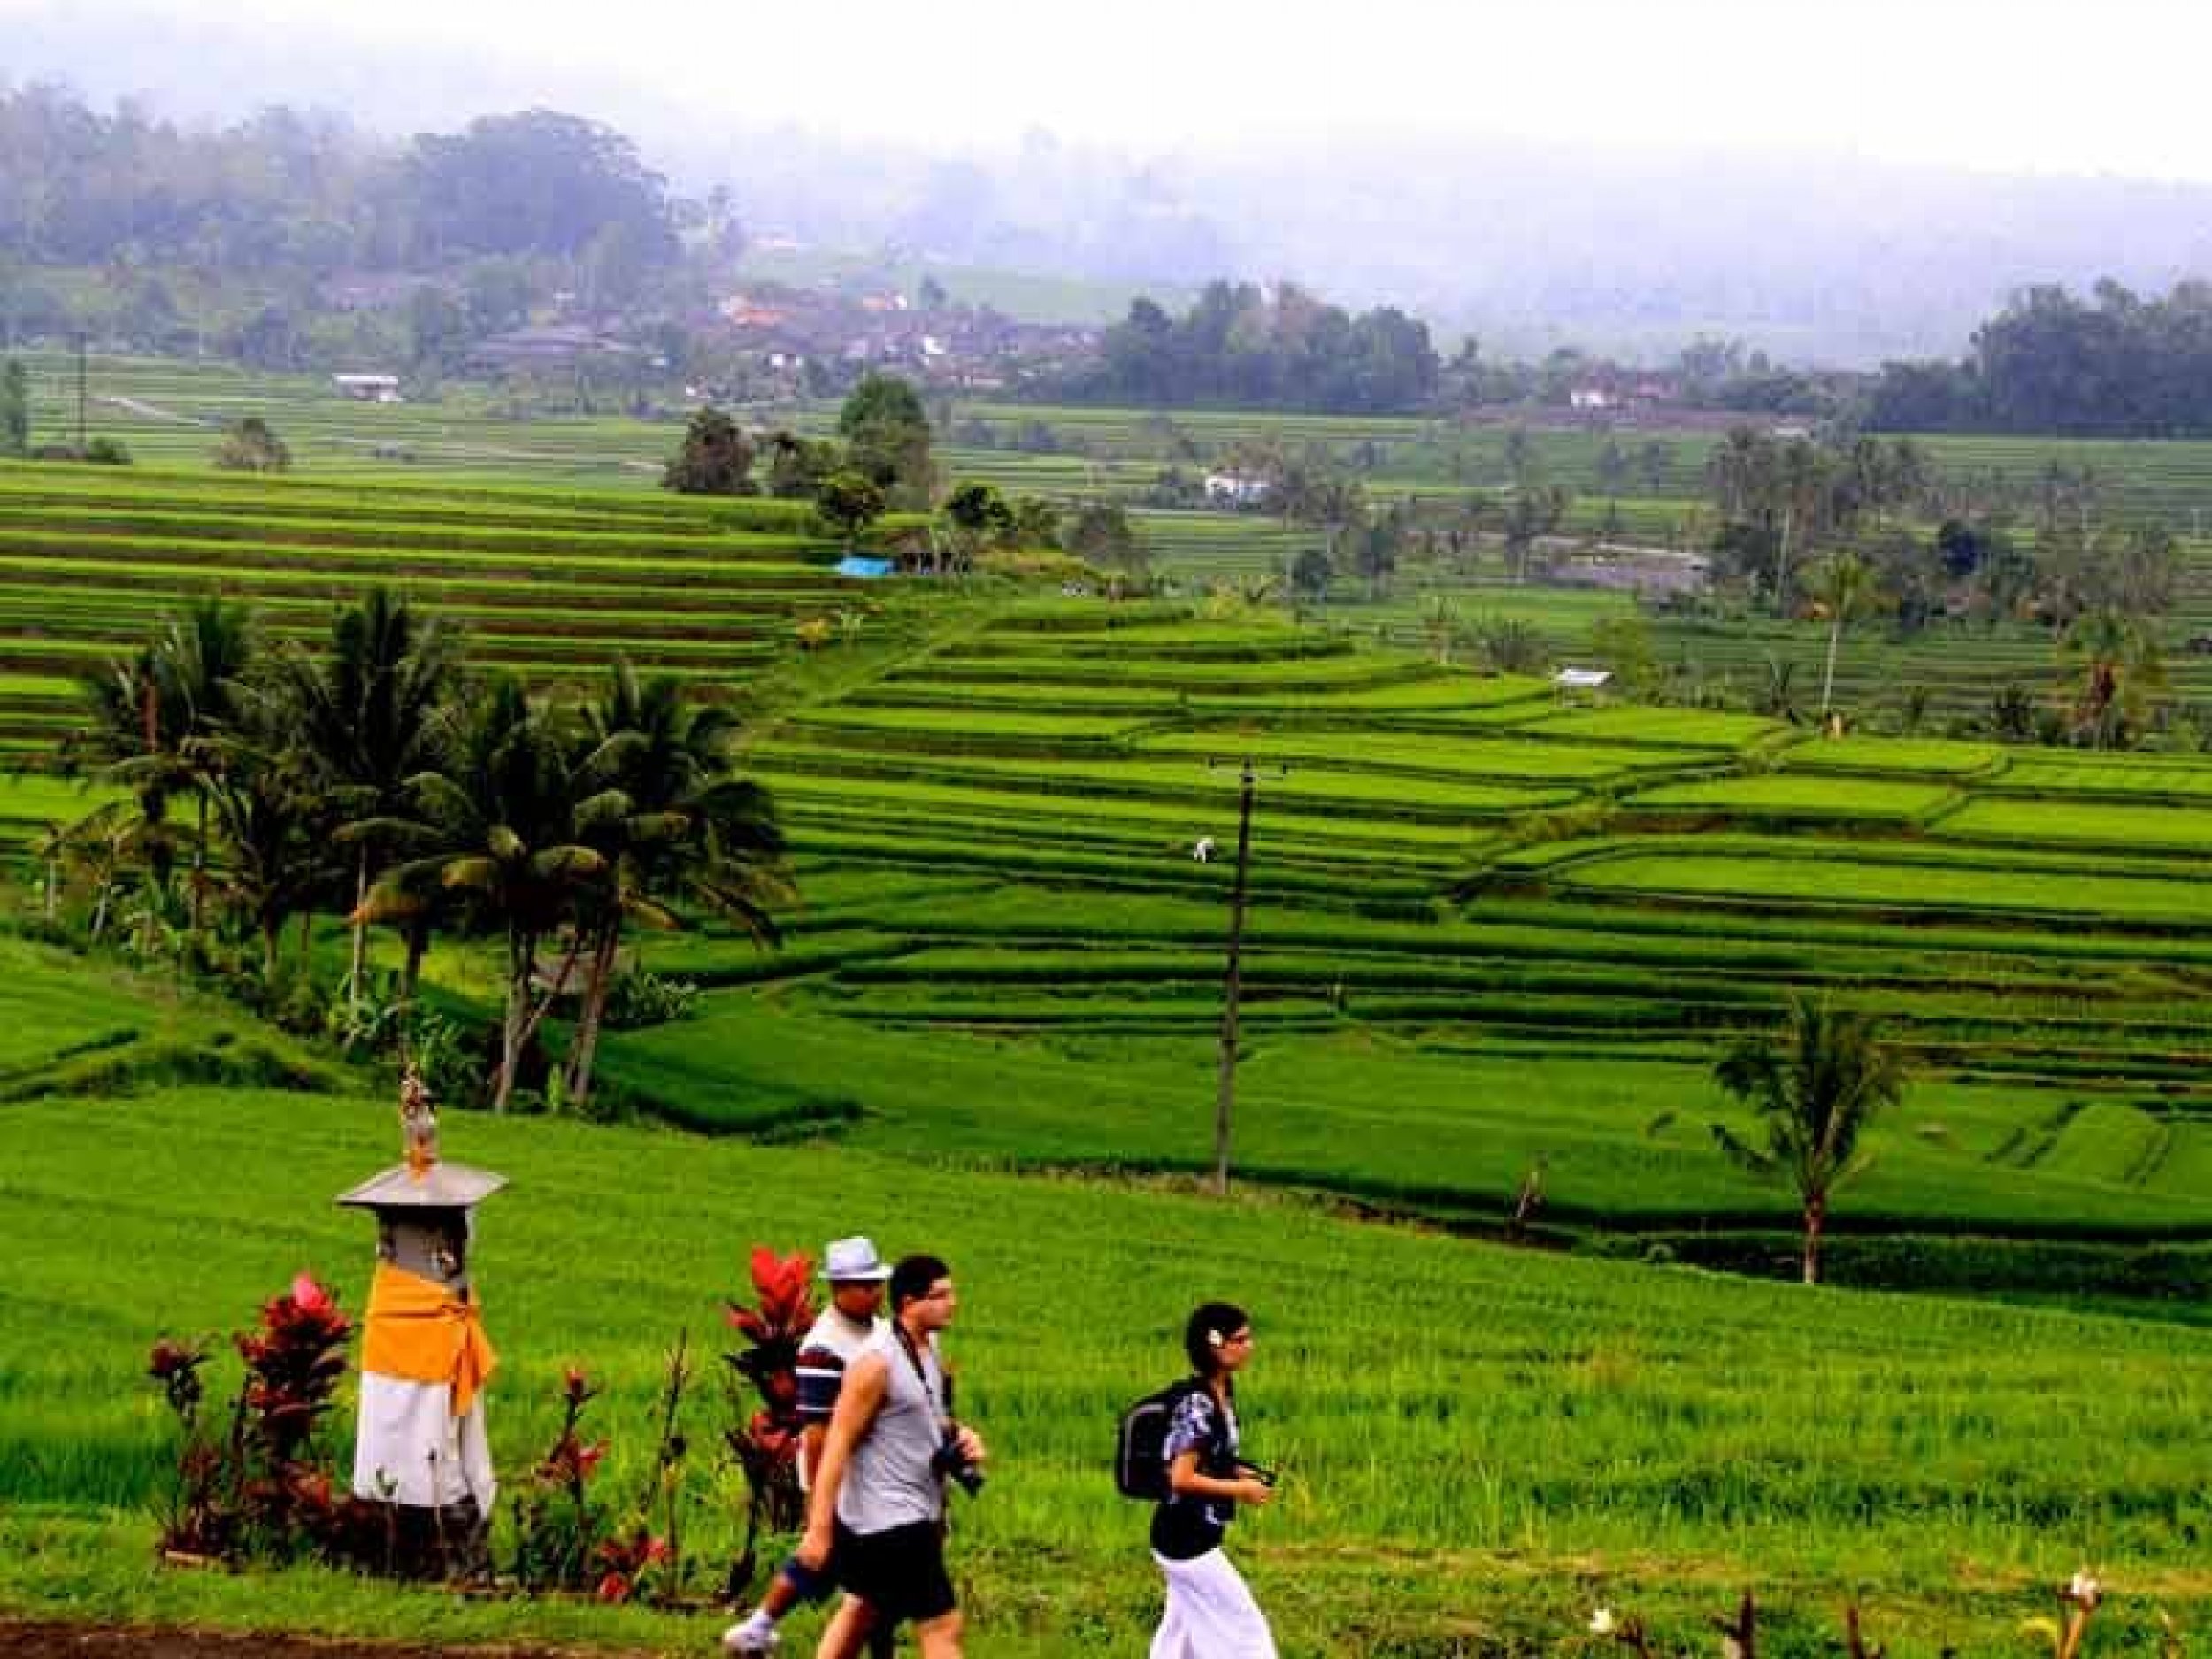 Cultural Landscape of Bali Province the Subak System as a Manifestation of the Tri Hita Karana Philosophy